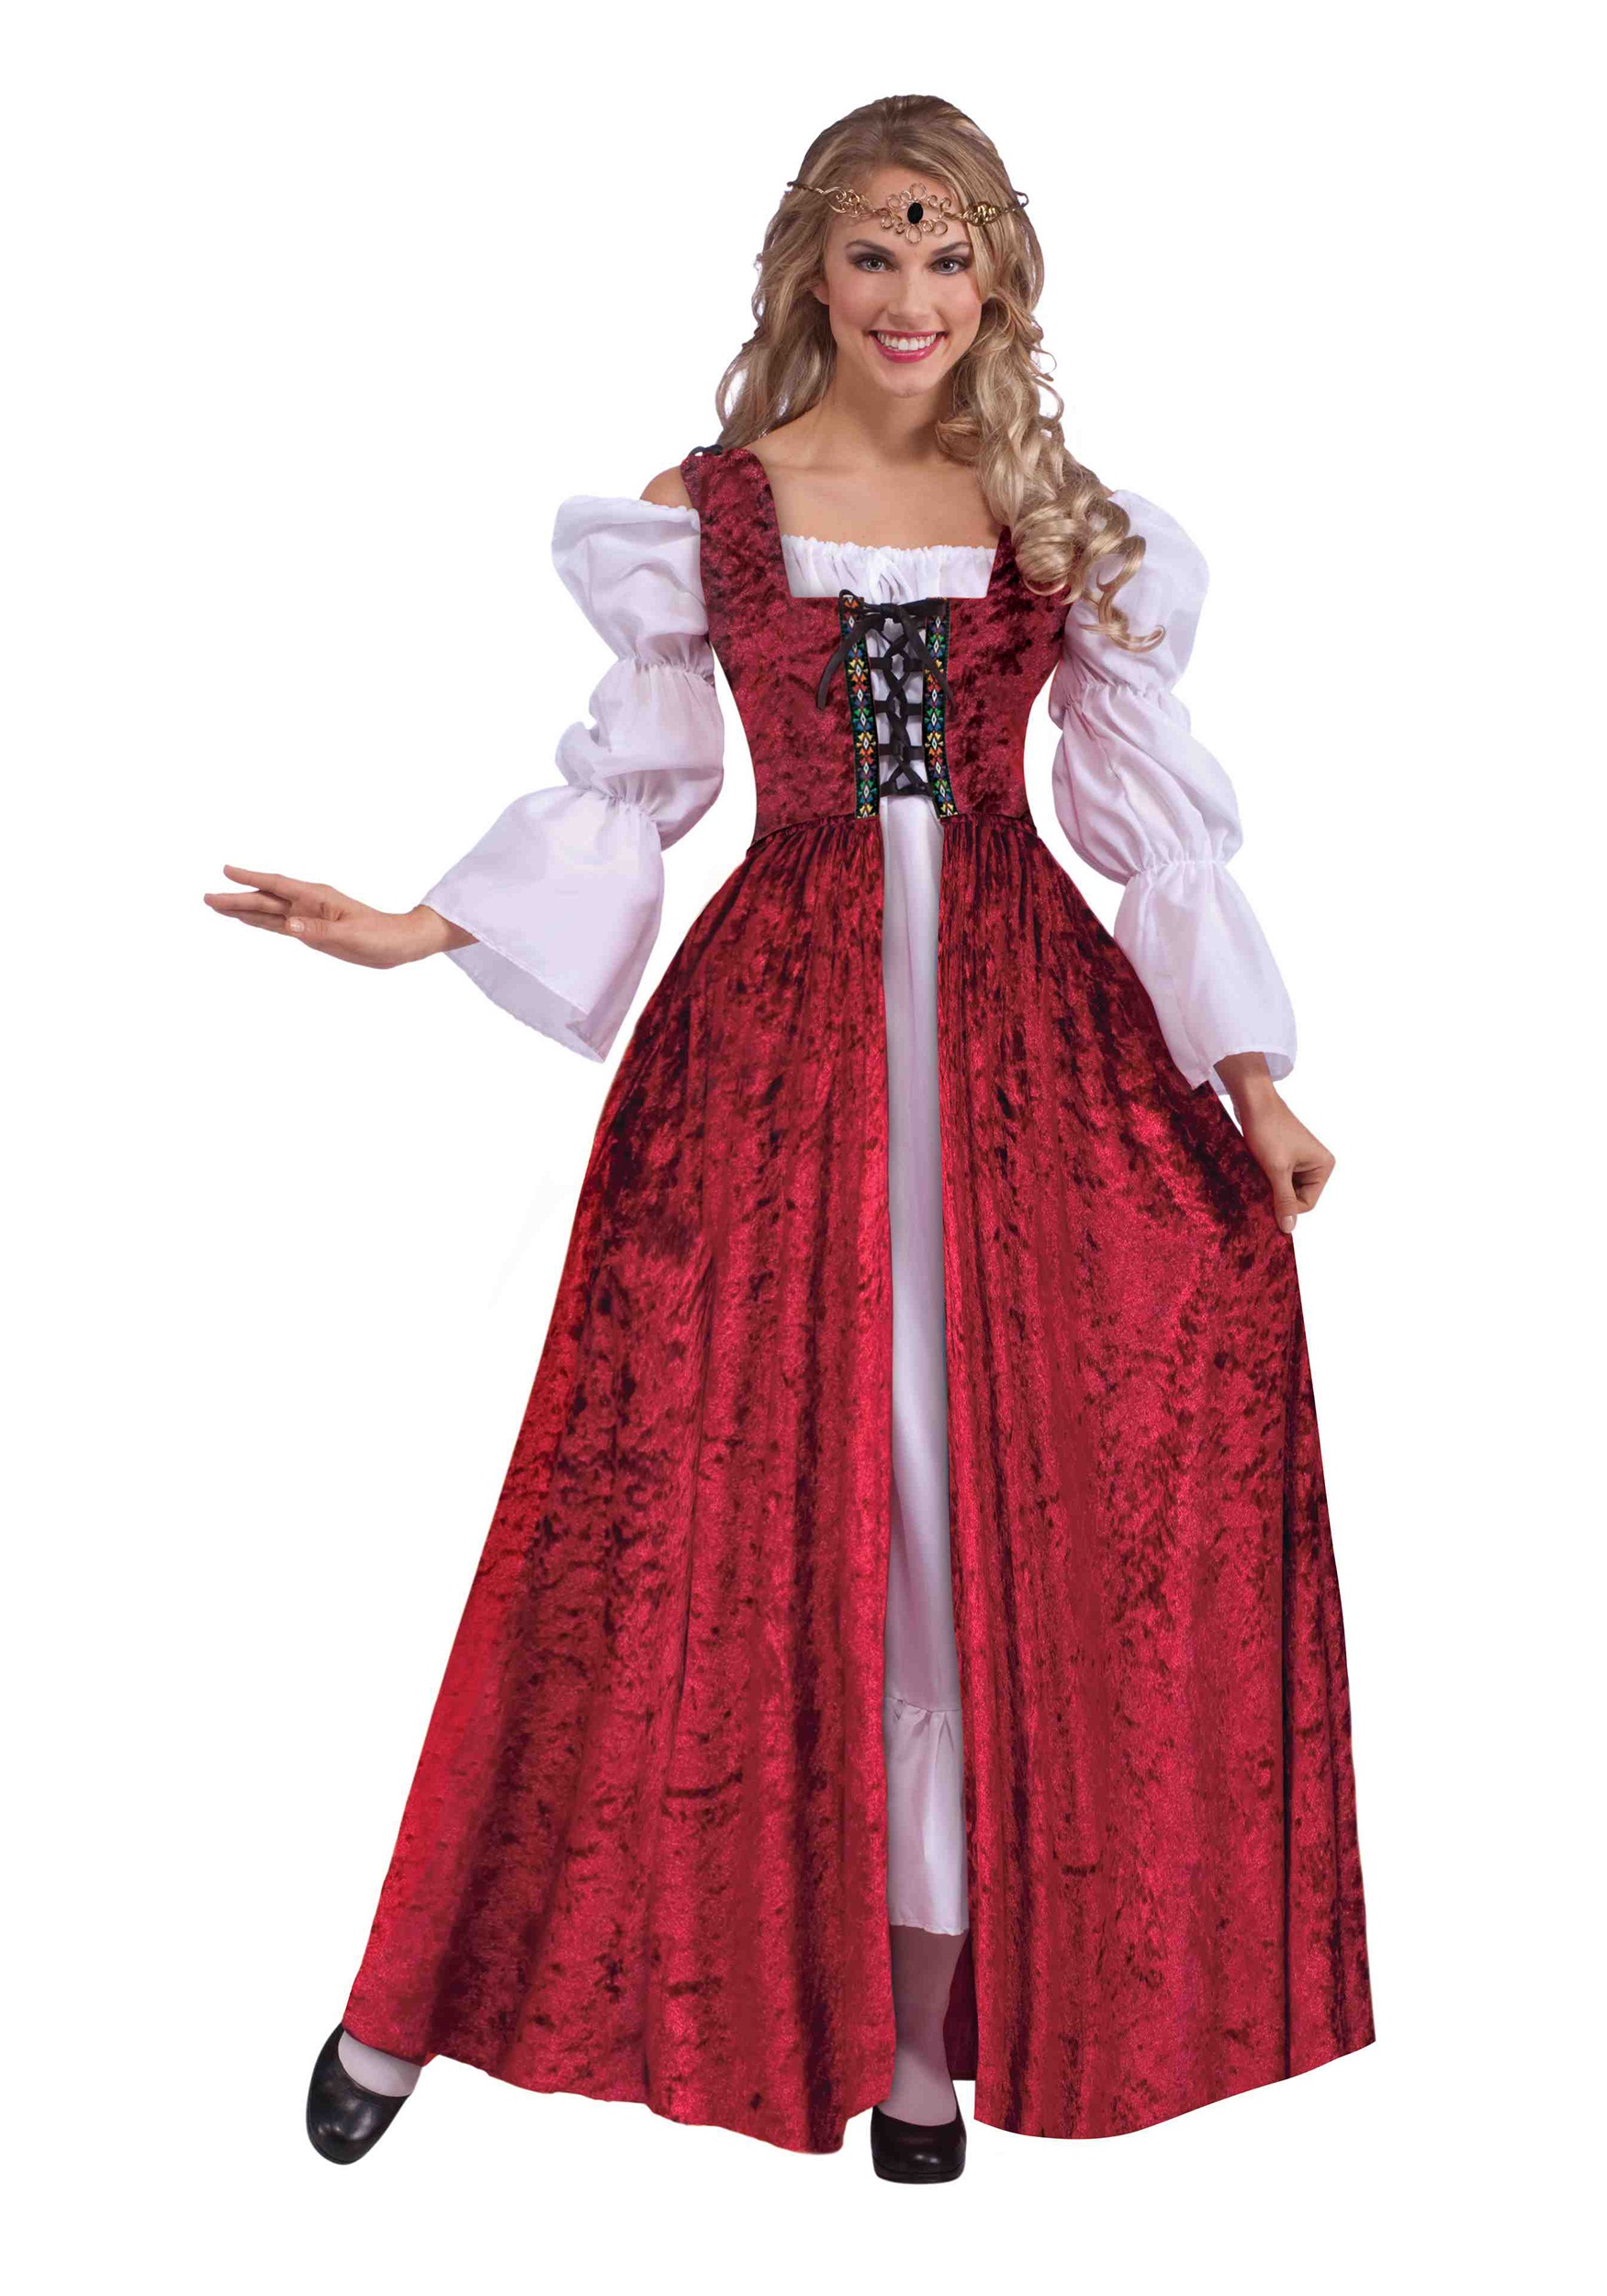 Mediueval Lace Up Gown Red Velvet Renaissance Fancy Dress Old England Tudor New 